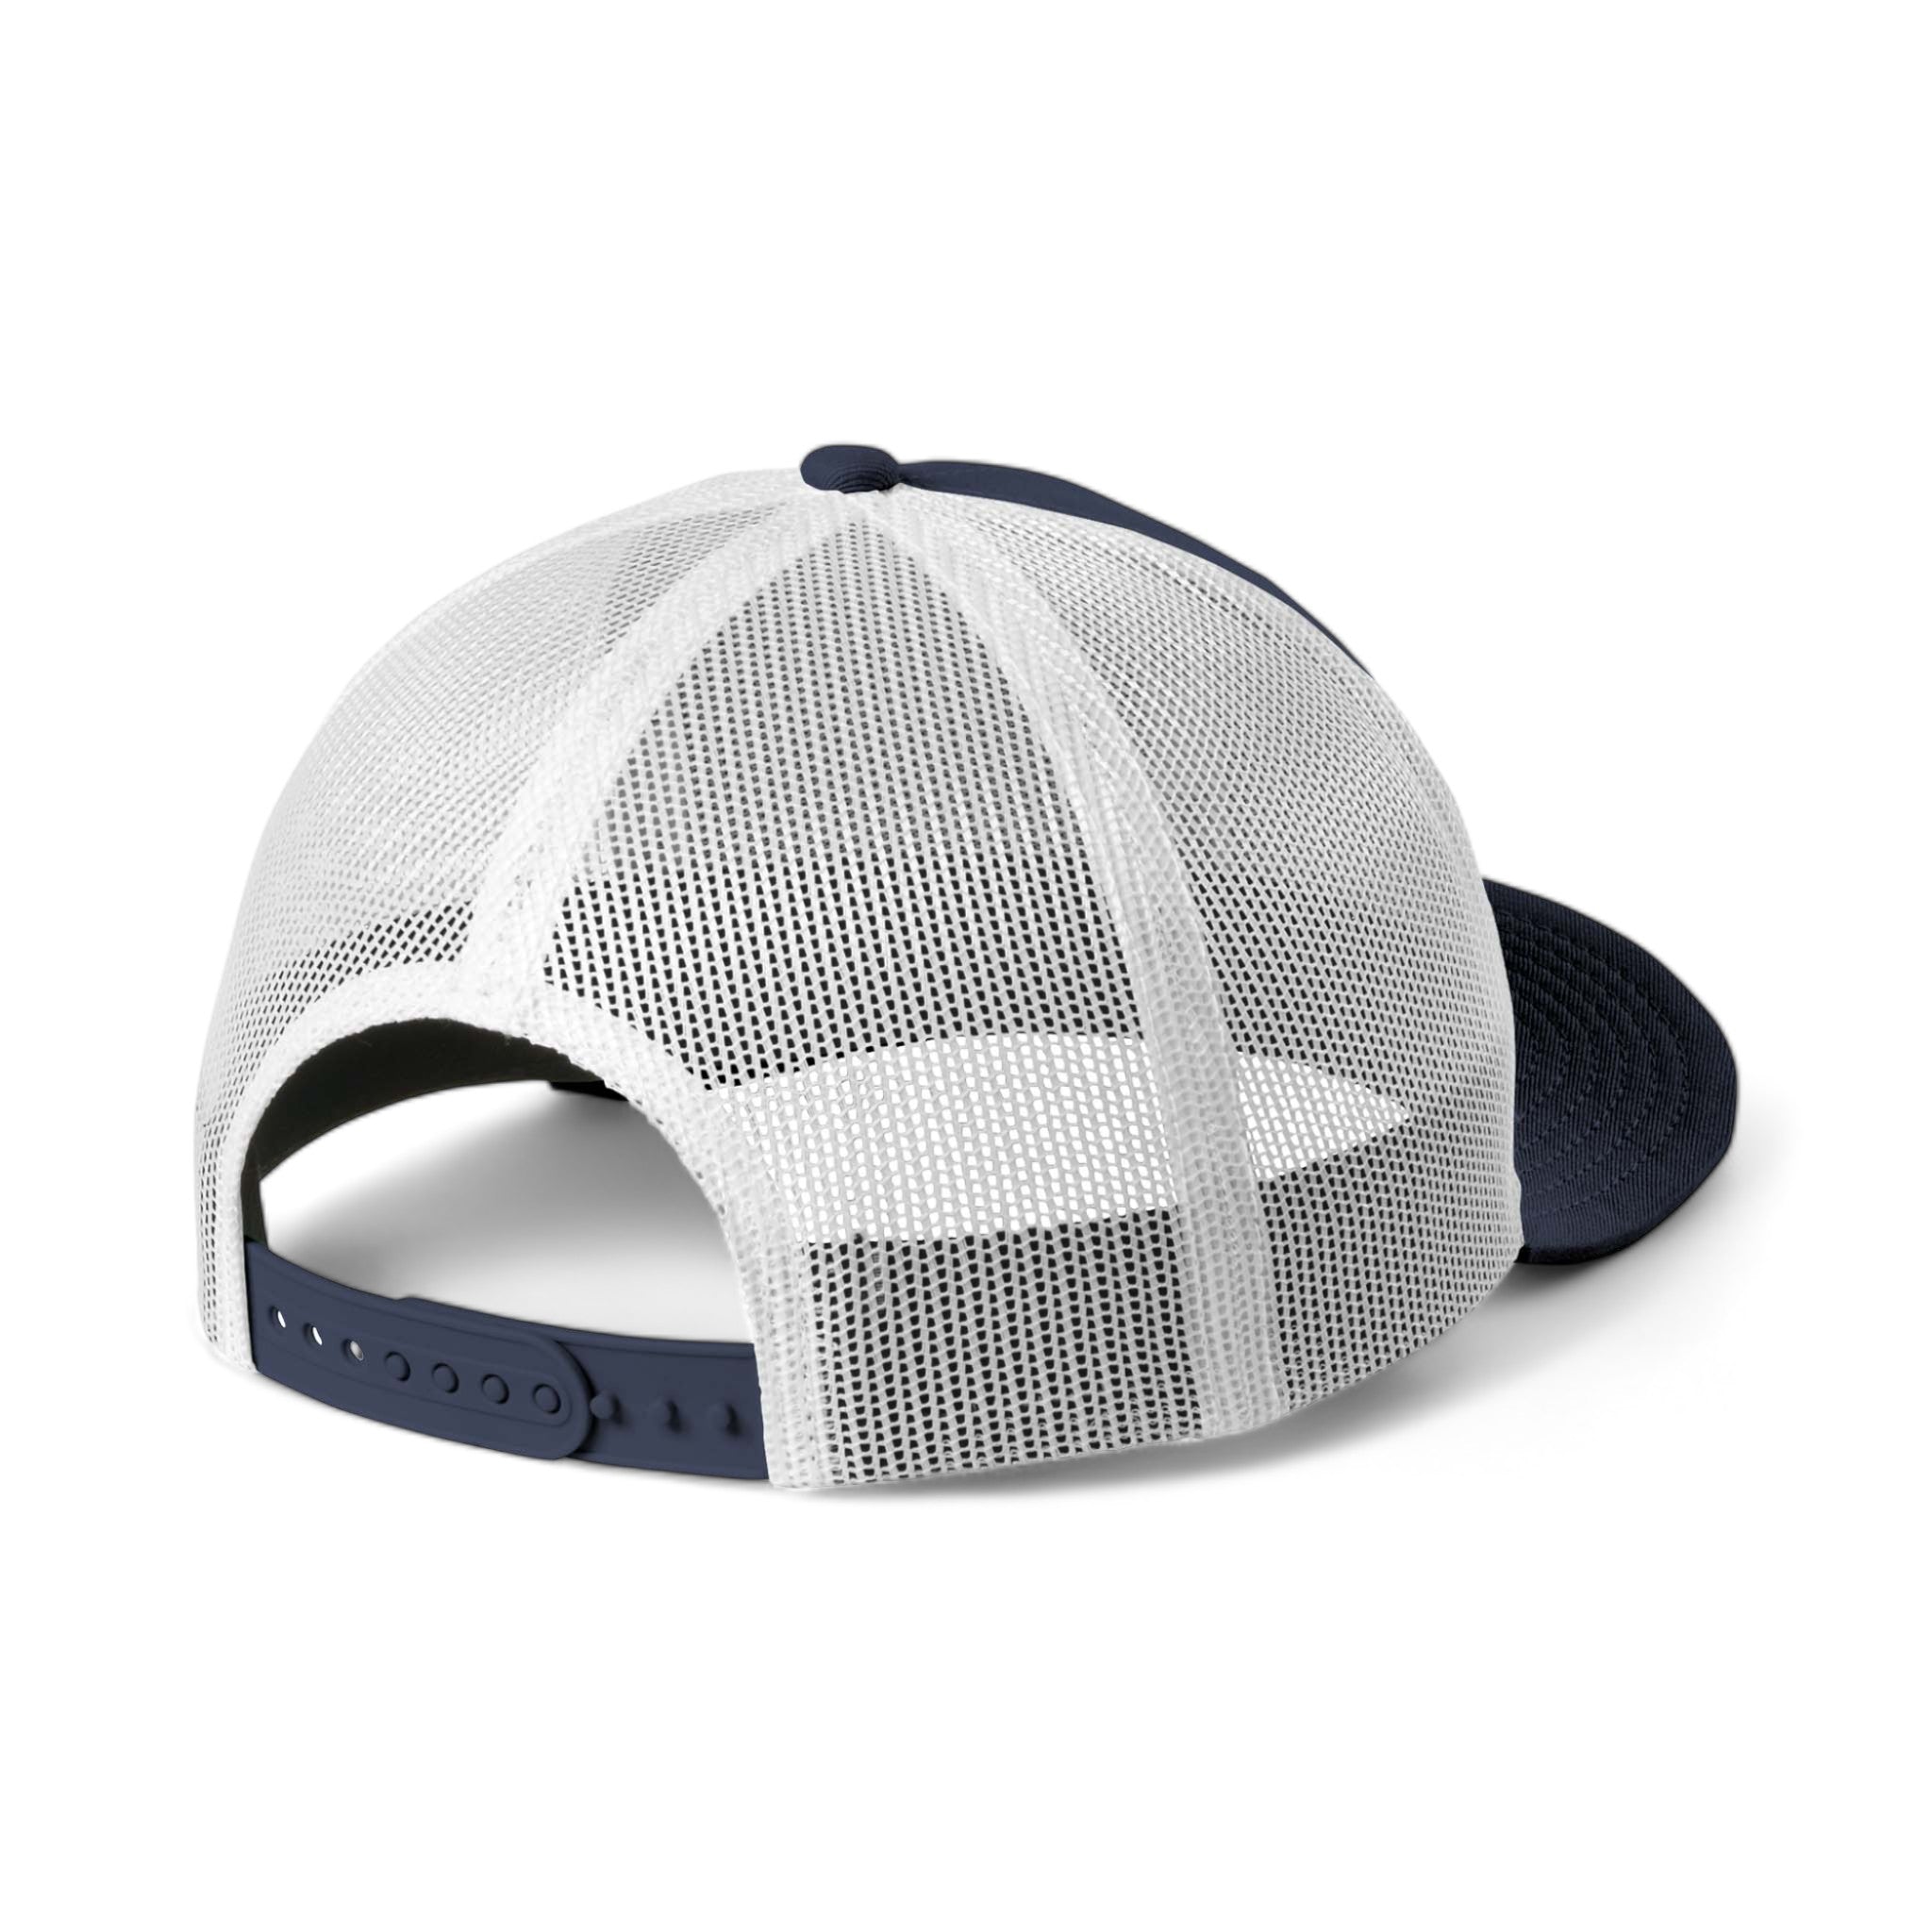 Back view of New Era NE207 custom hat in deep navy and white